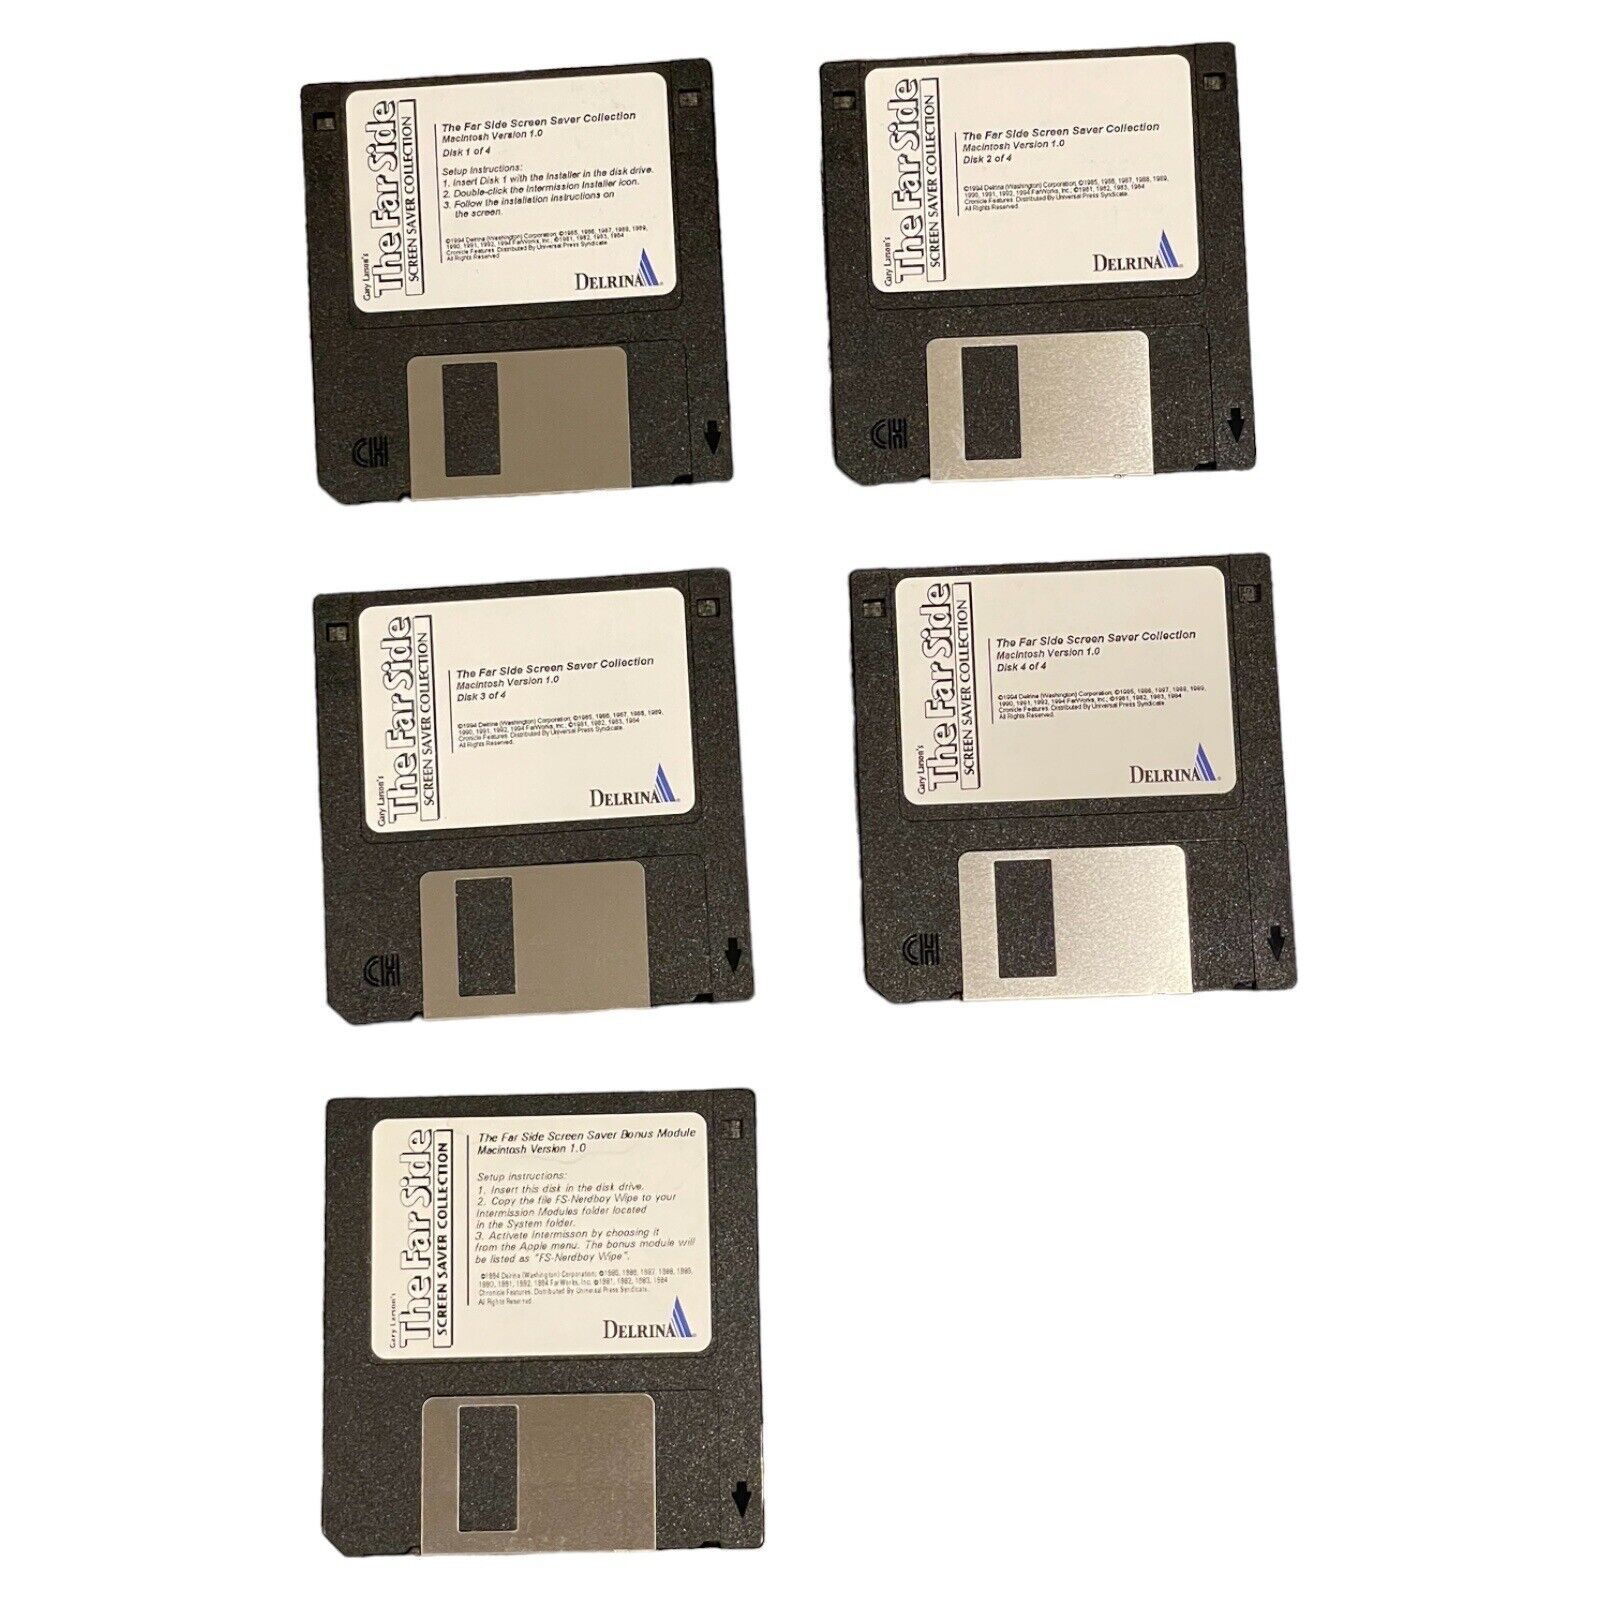 Vtg 1994 Gary Larson The Far Side Screen Savers 3.5 Floppy Disks Mac Macintosh